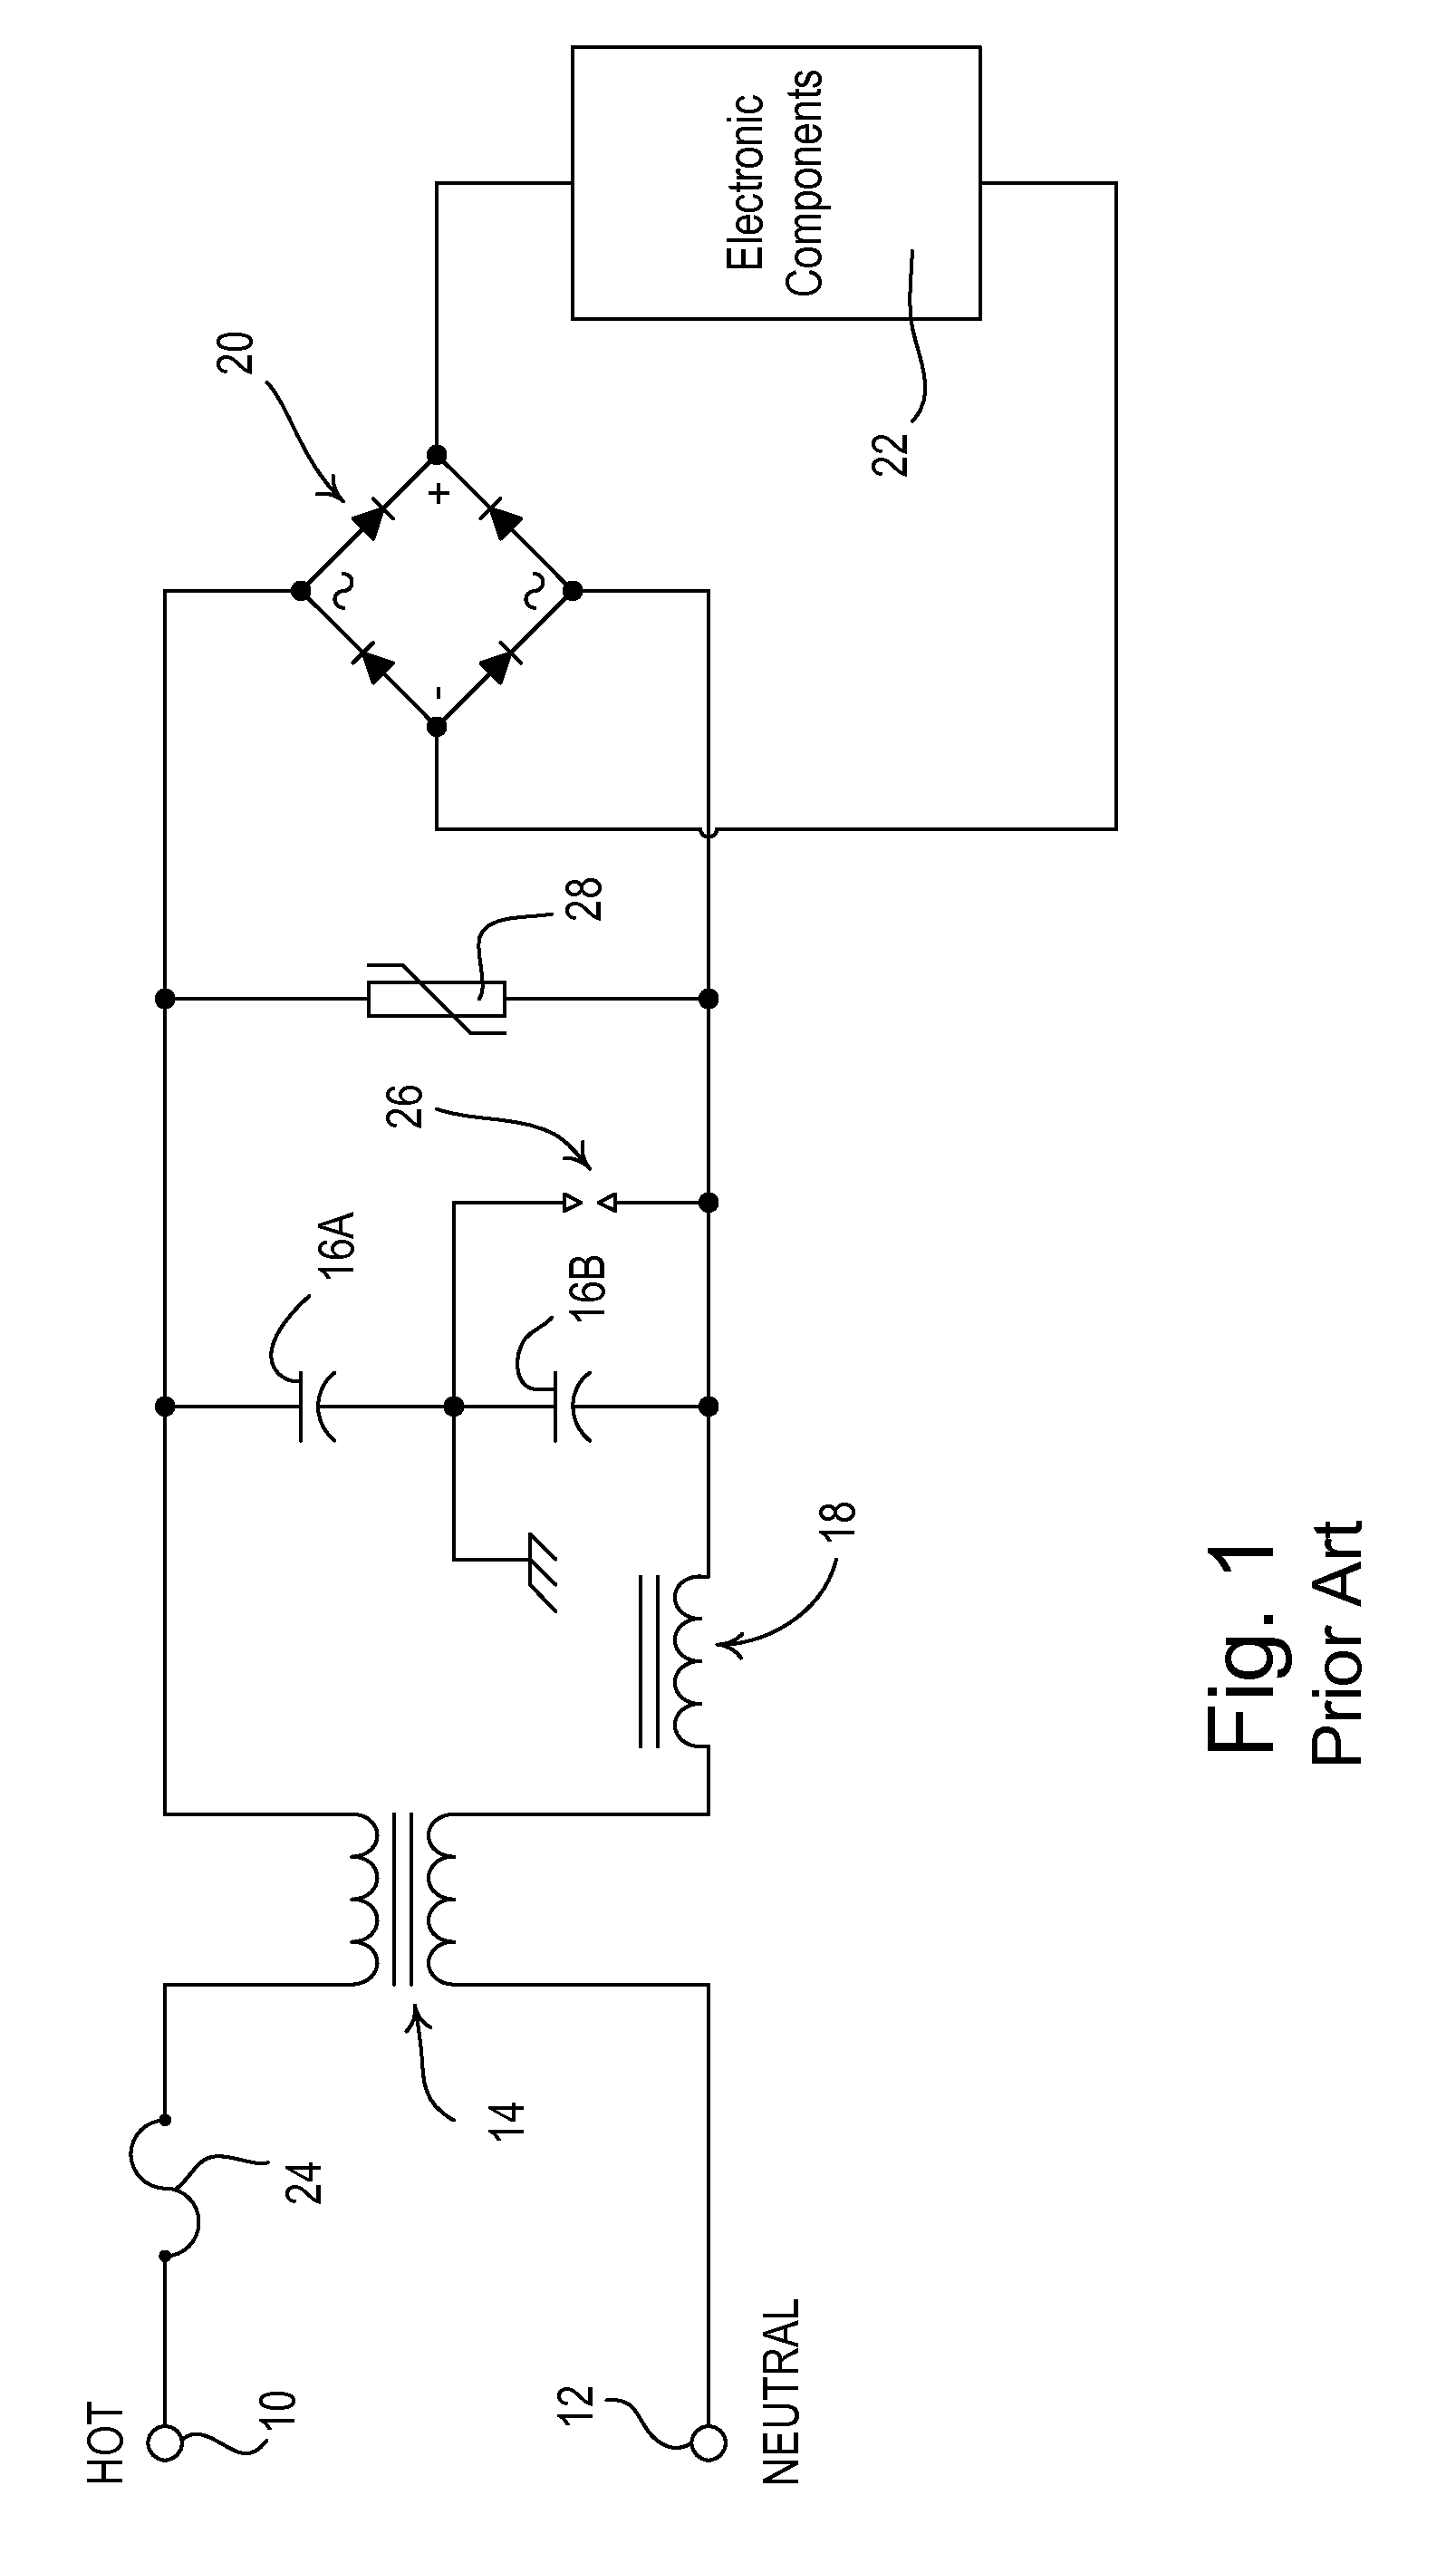 Surge suppression circuit for a load control device